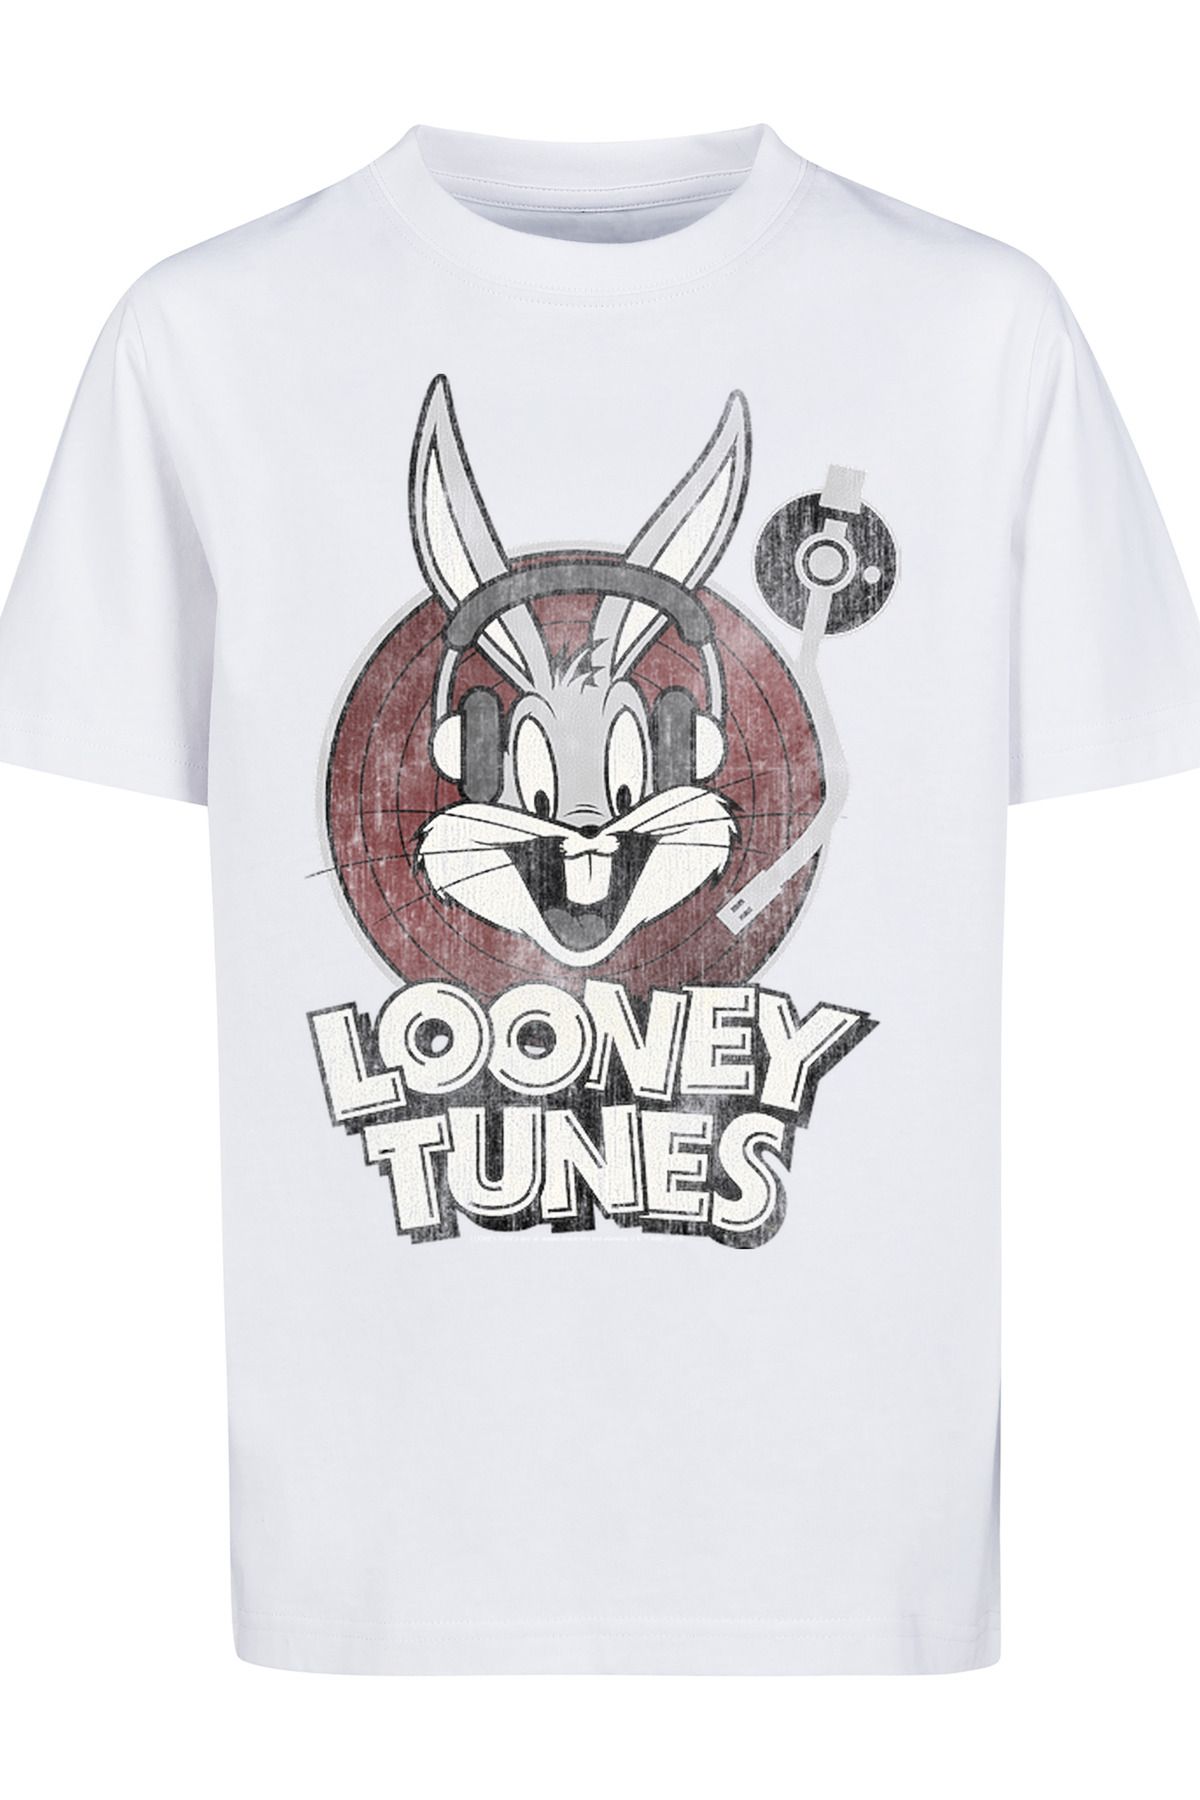 F4NT4STIC Kinder Looney - Basic Trendyol mit Kids T-Shirt Bunny Bugs Tunes